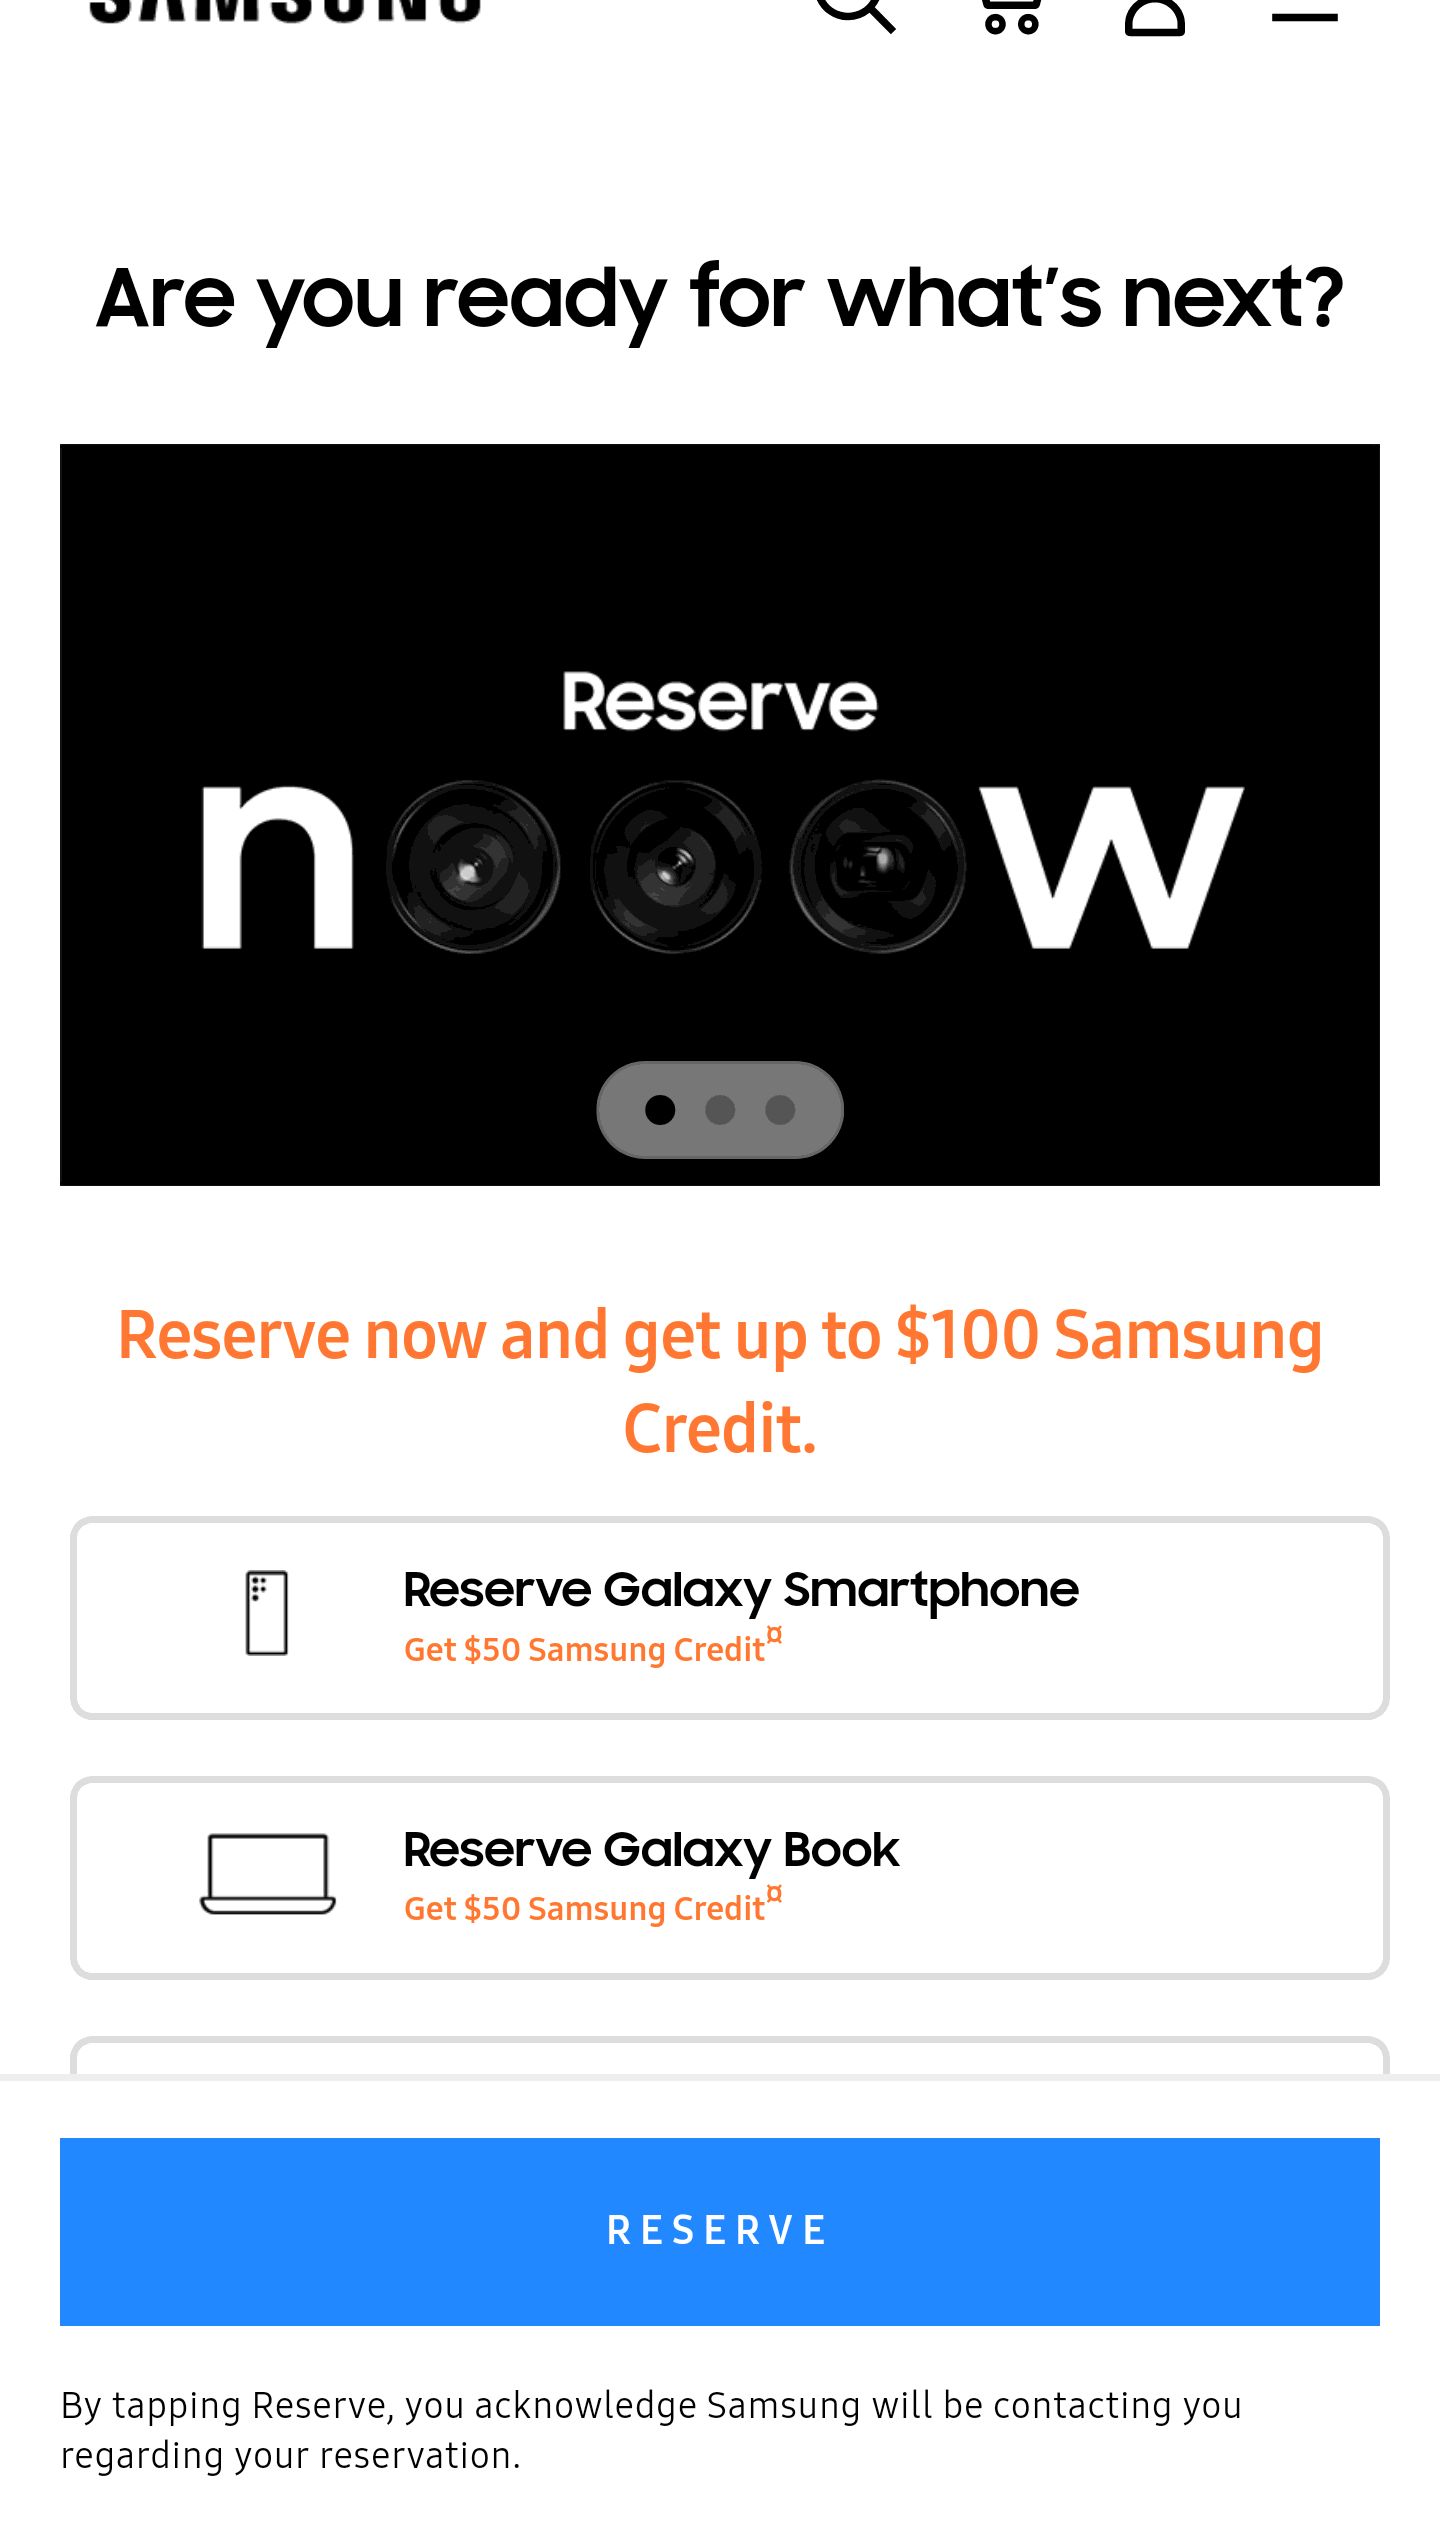 Samsung Unpacked: Reserve The Next Galaxy Smartphone and Galaxy Book三星手机